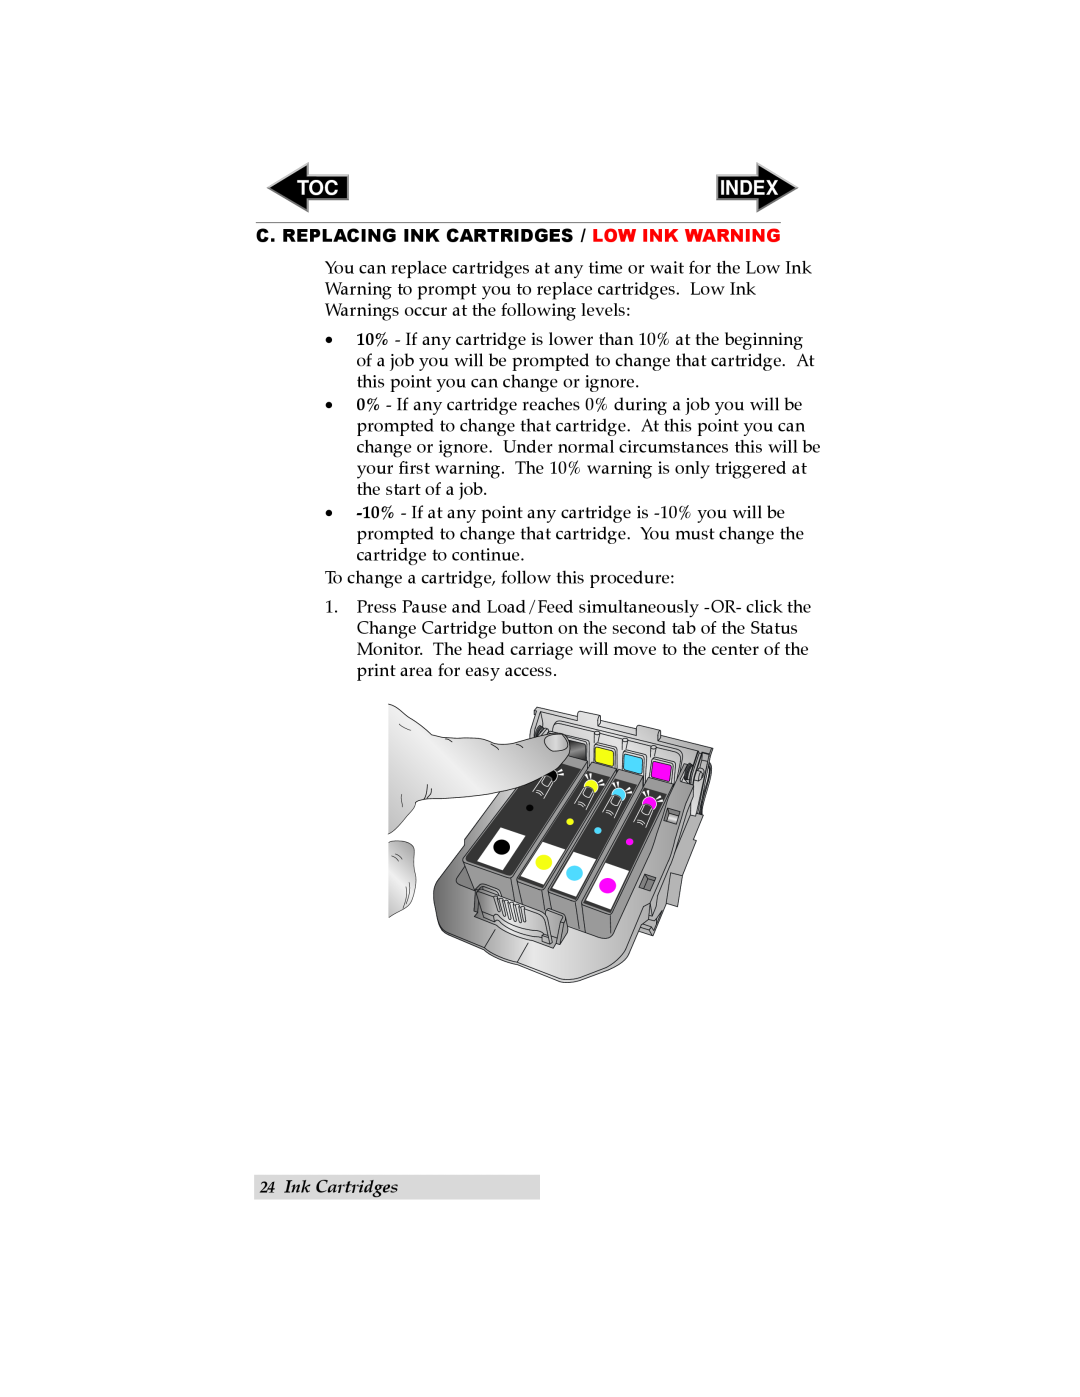 Primera Technology RX900 user manual C. Replacing Ink Cartridges / Low Ink Warning, Index 